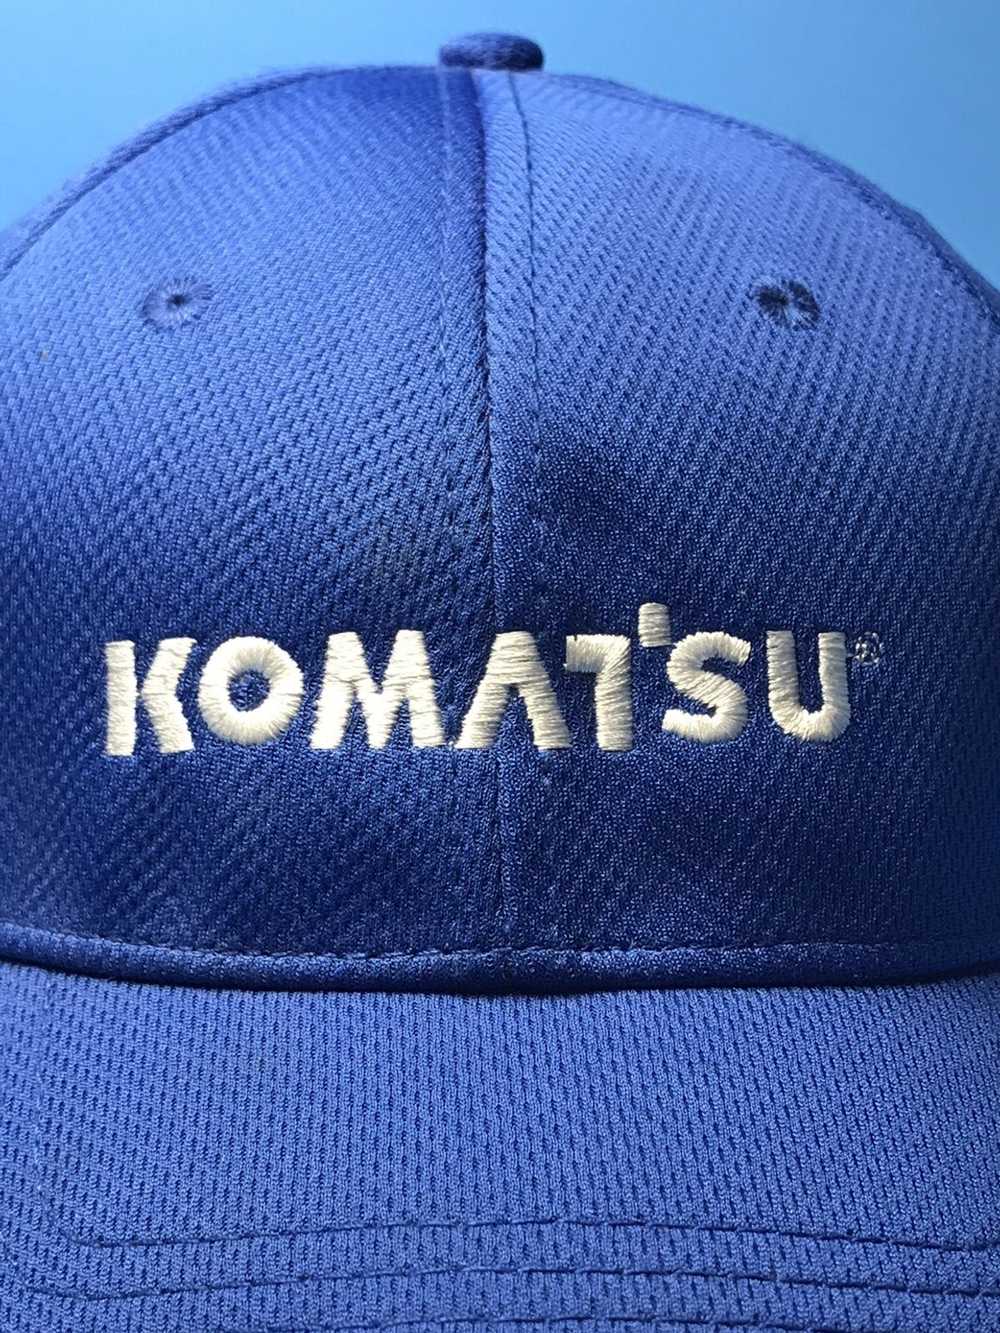 Vintage Vintage Komatsu Hat - image 2